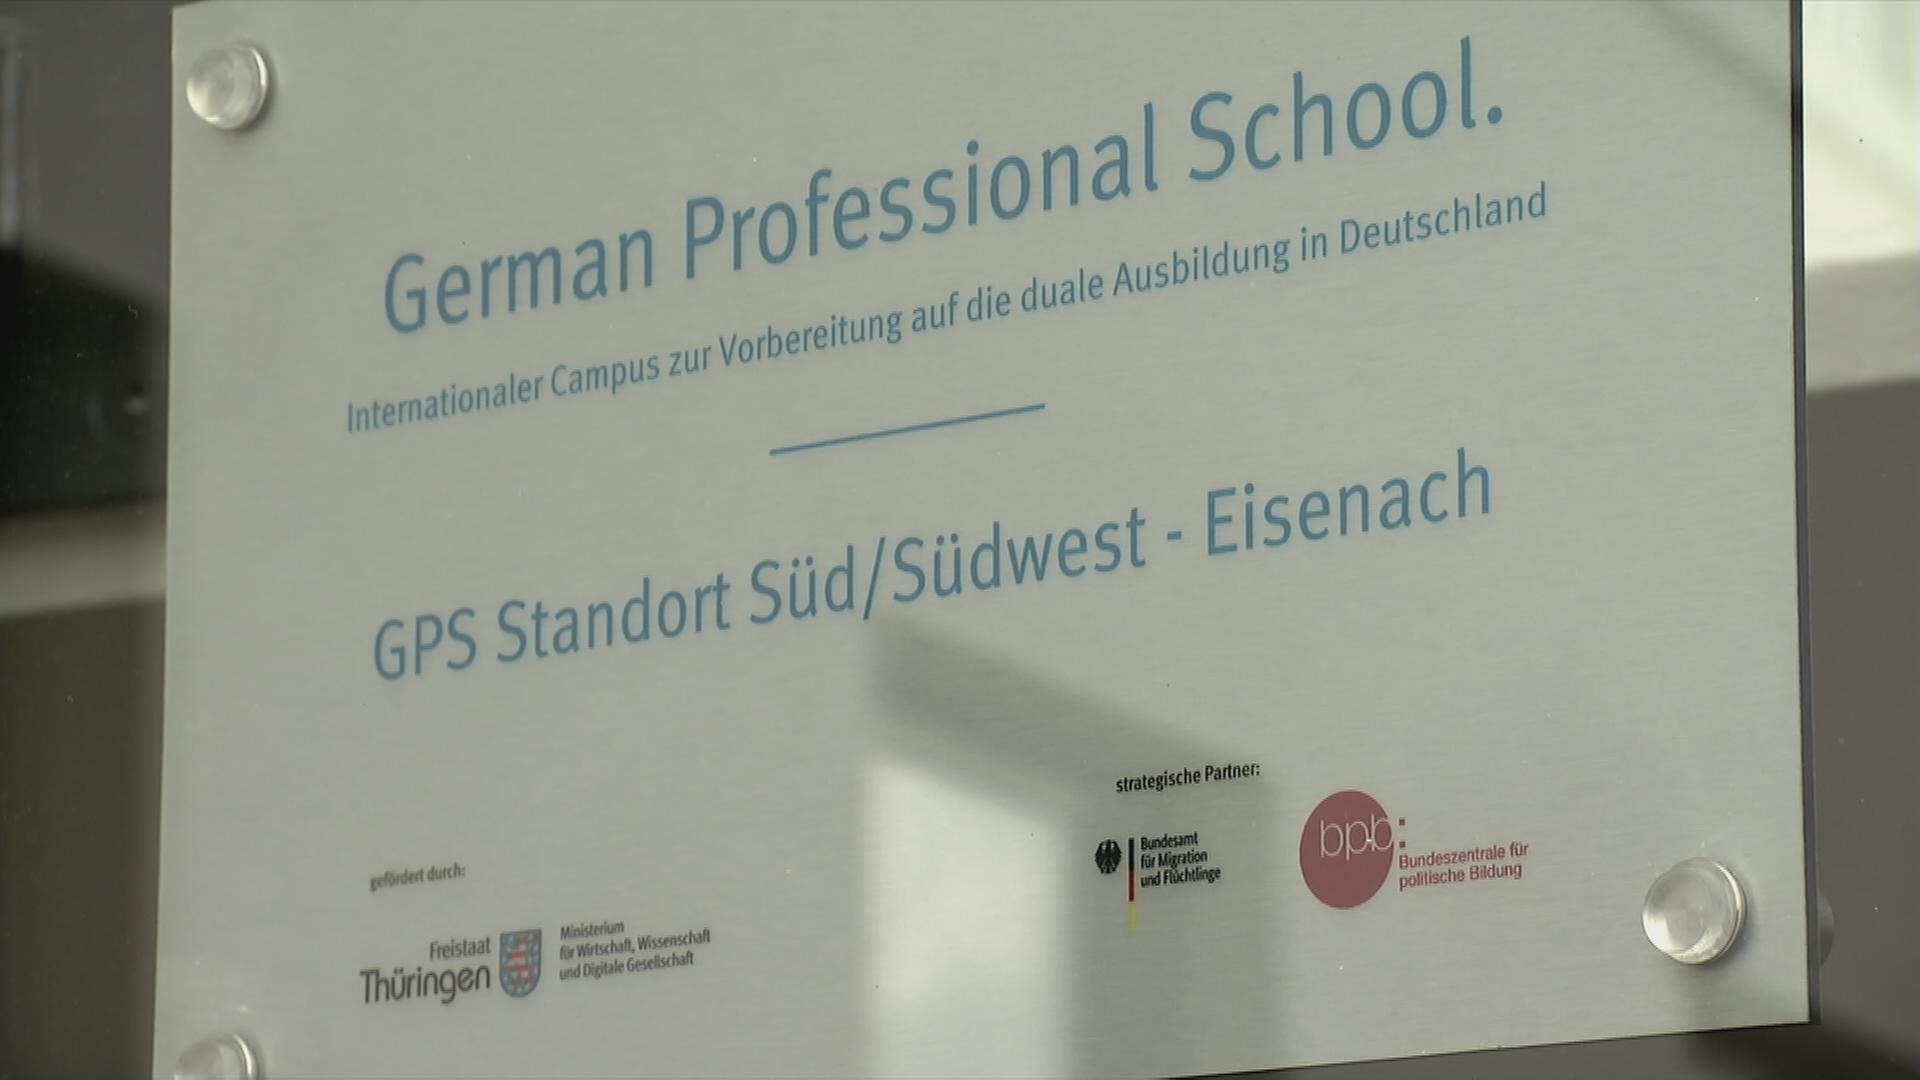 German Professional School